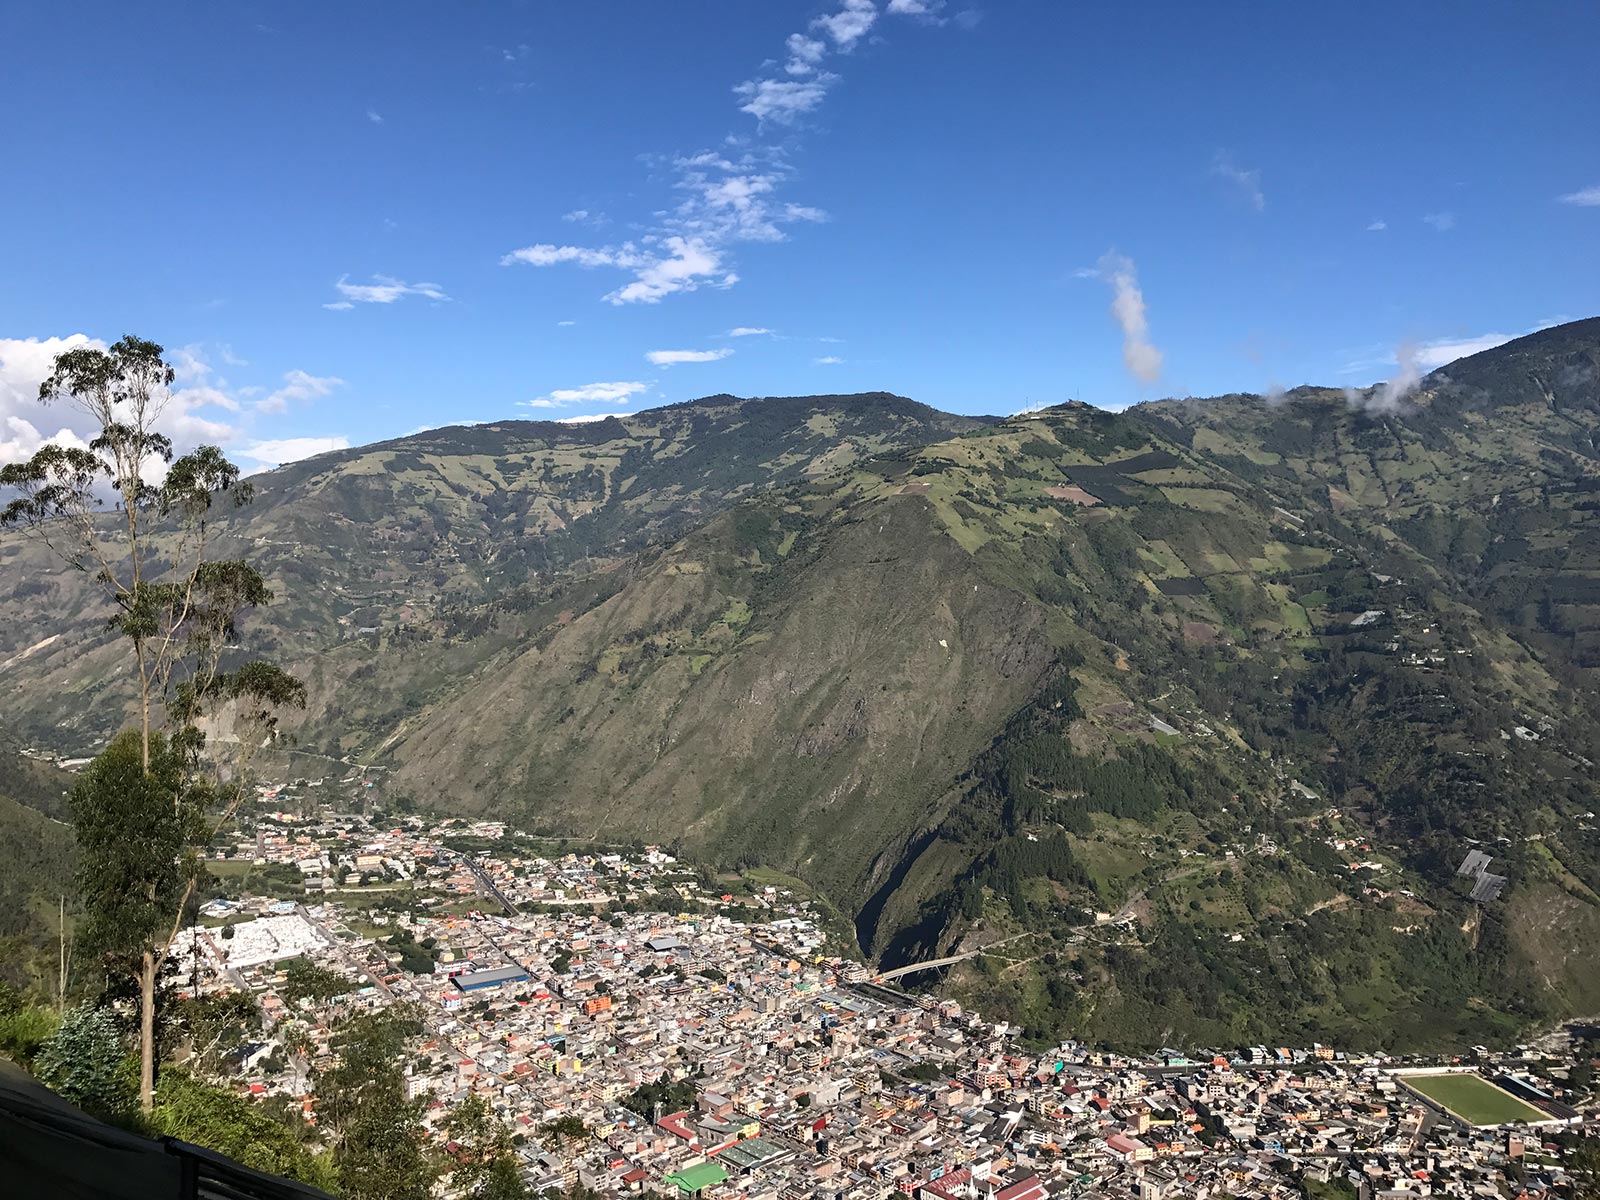 Mountains and birds eye view of Banôs, Ecuador. A Swing, The Equator & needing the Banôs in Banôs